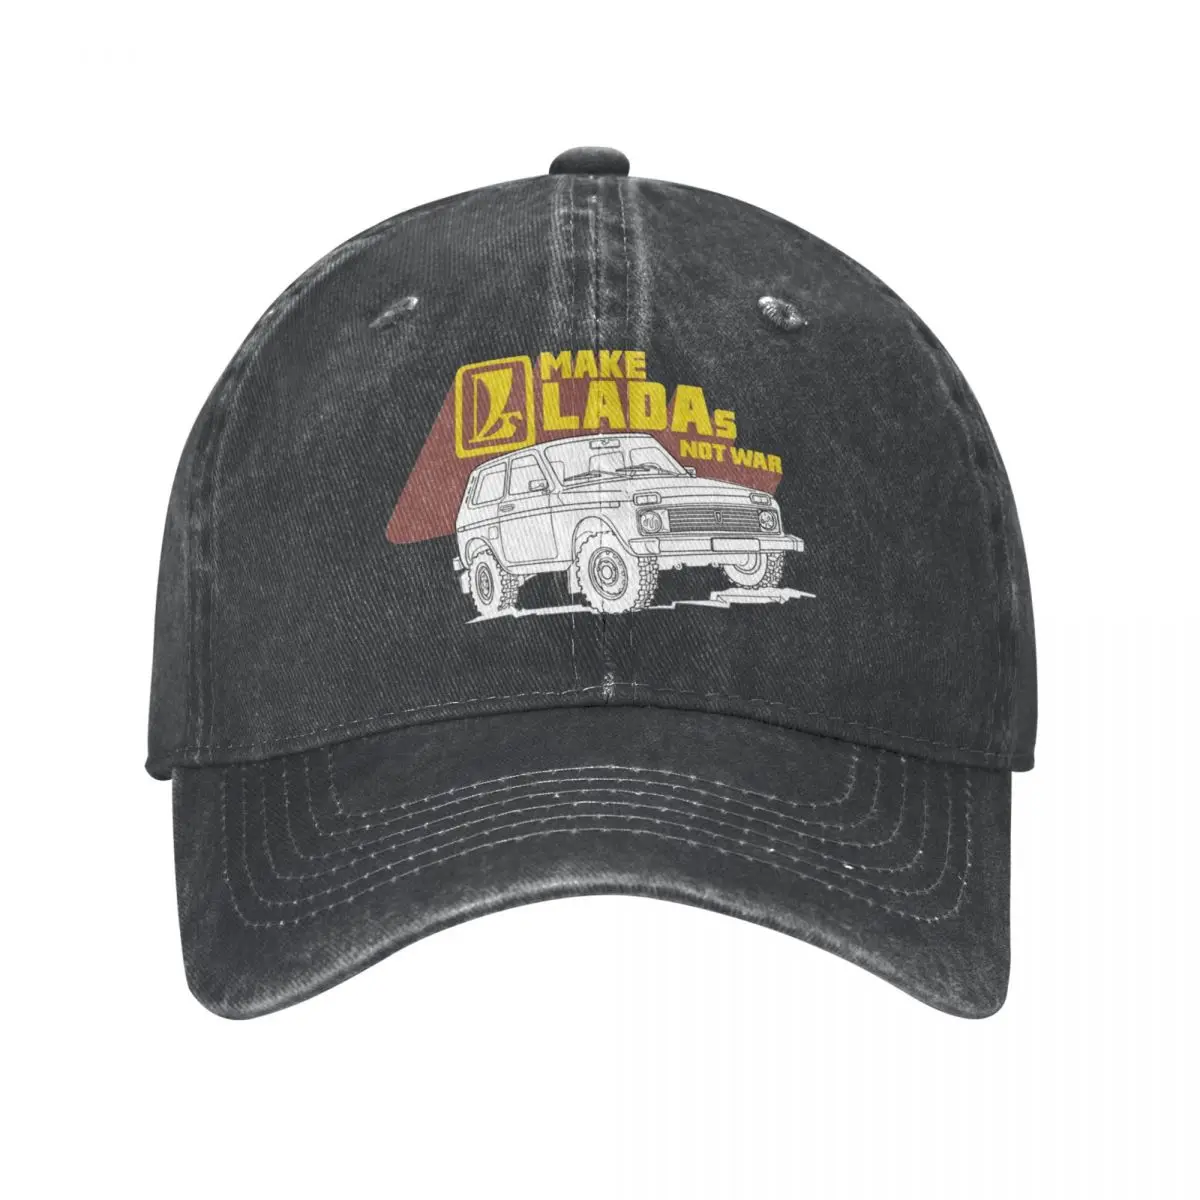 

Lada Niva Car Trucker Hat Accessories Vintage Distressed Denim Snapback Hat For Men Women Adjustable